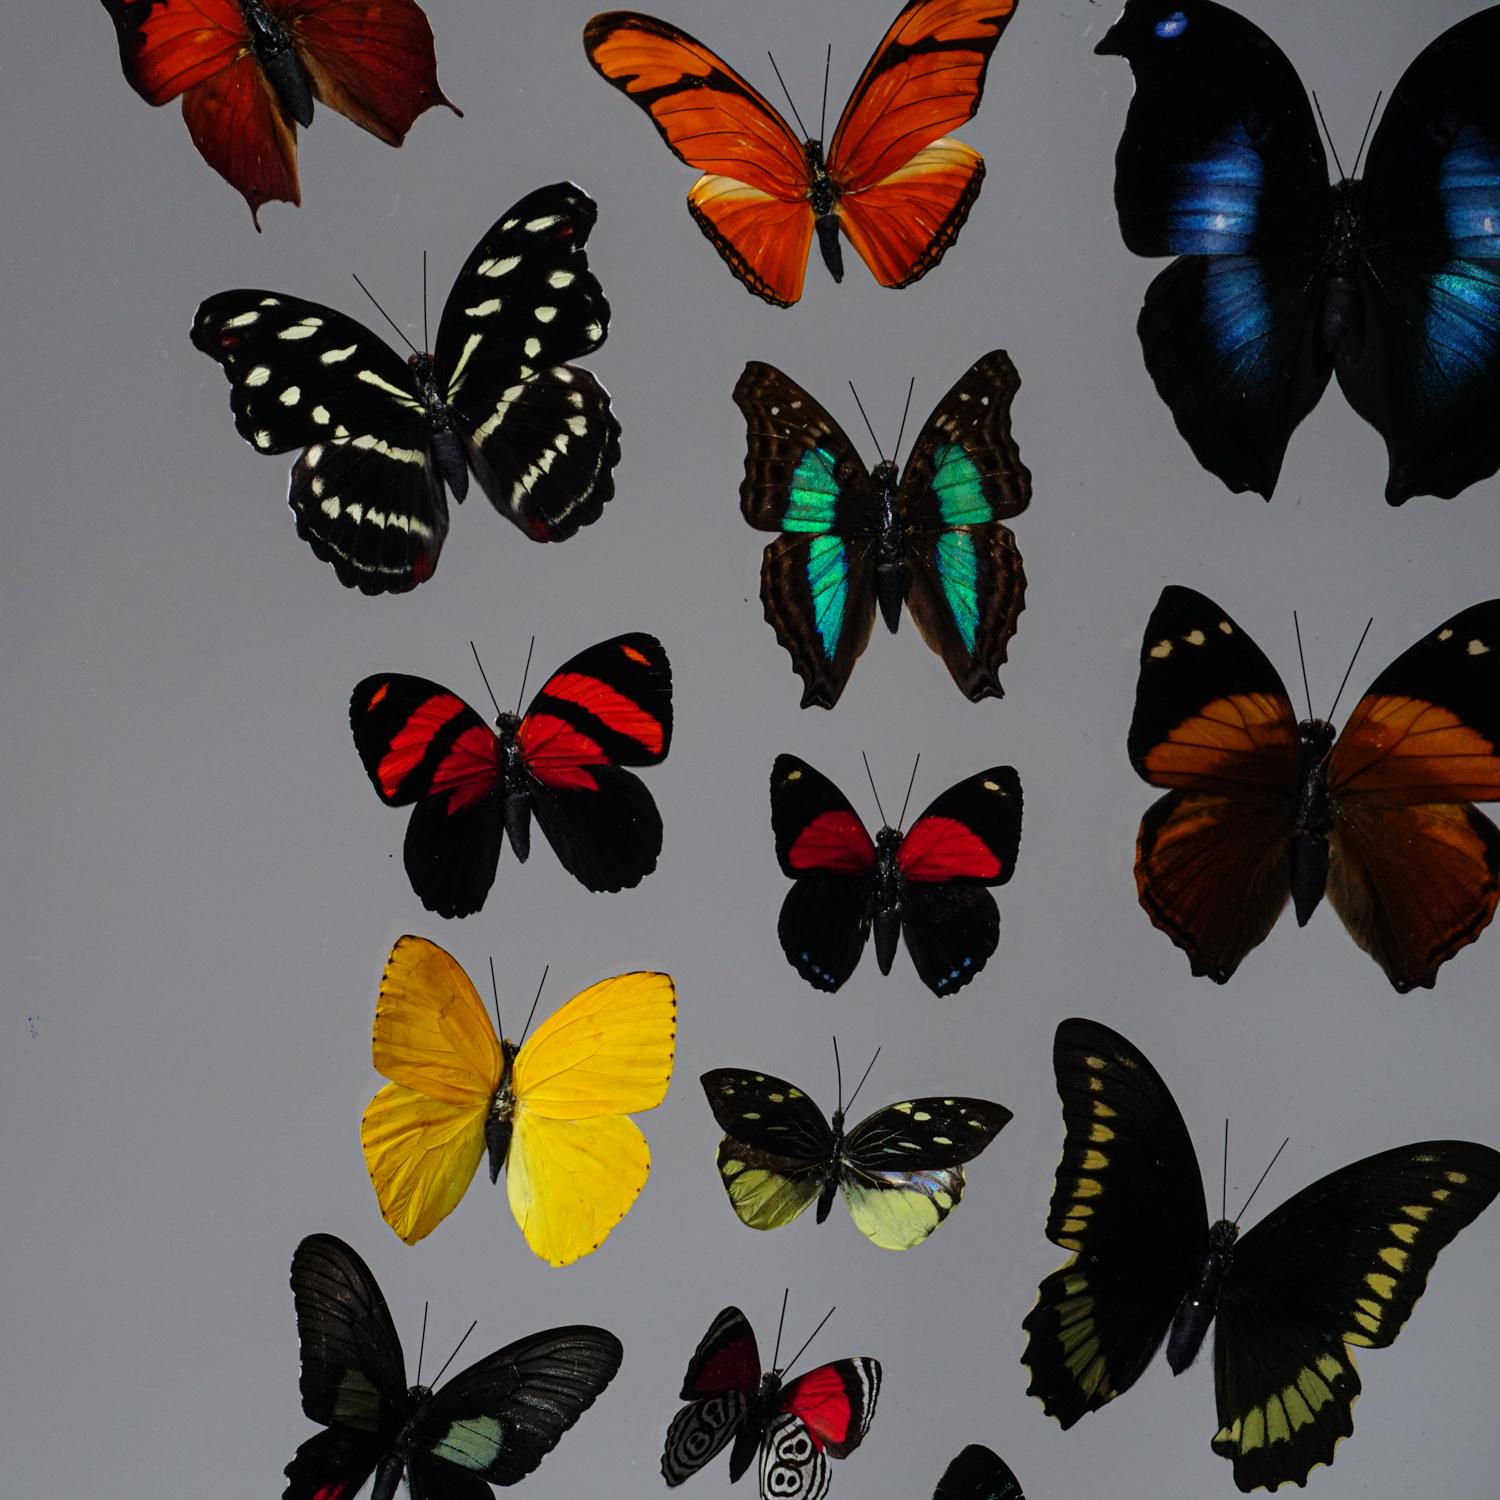 Peruvian Genuine Butterflies Specimen in Black Display Frame '32 Butterflies'